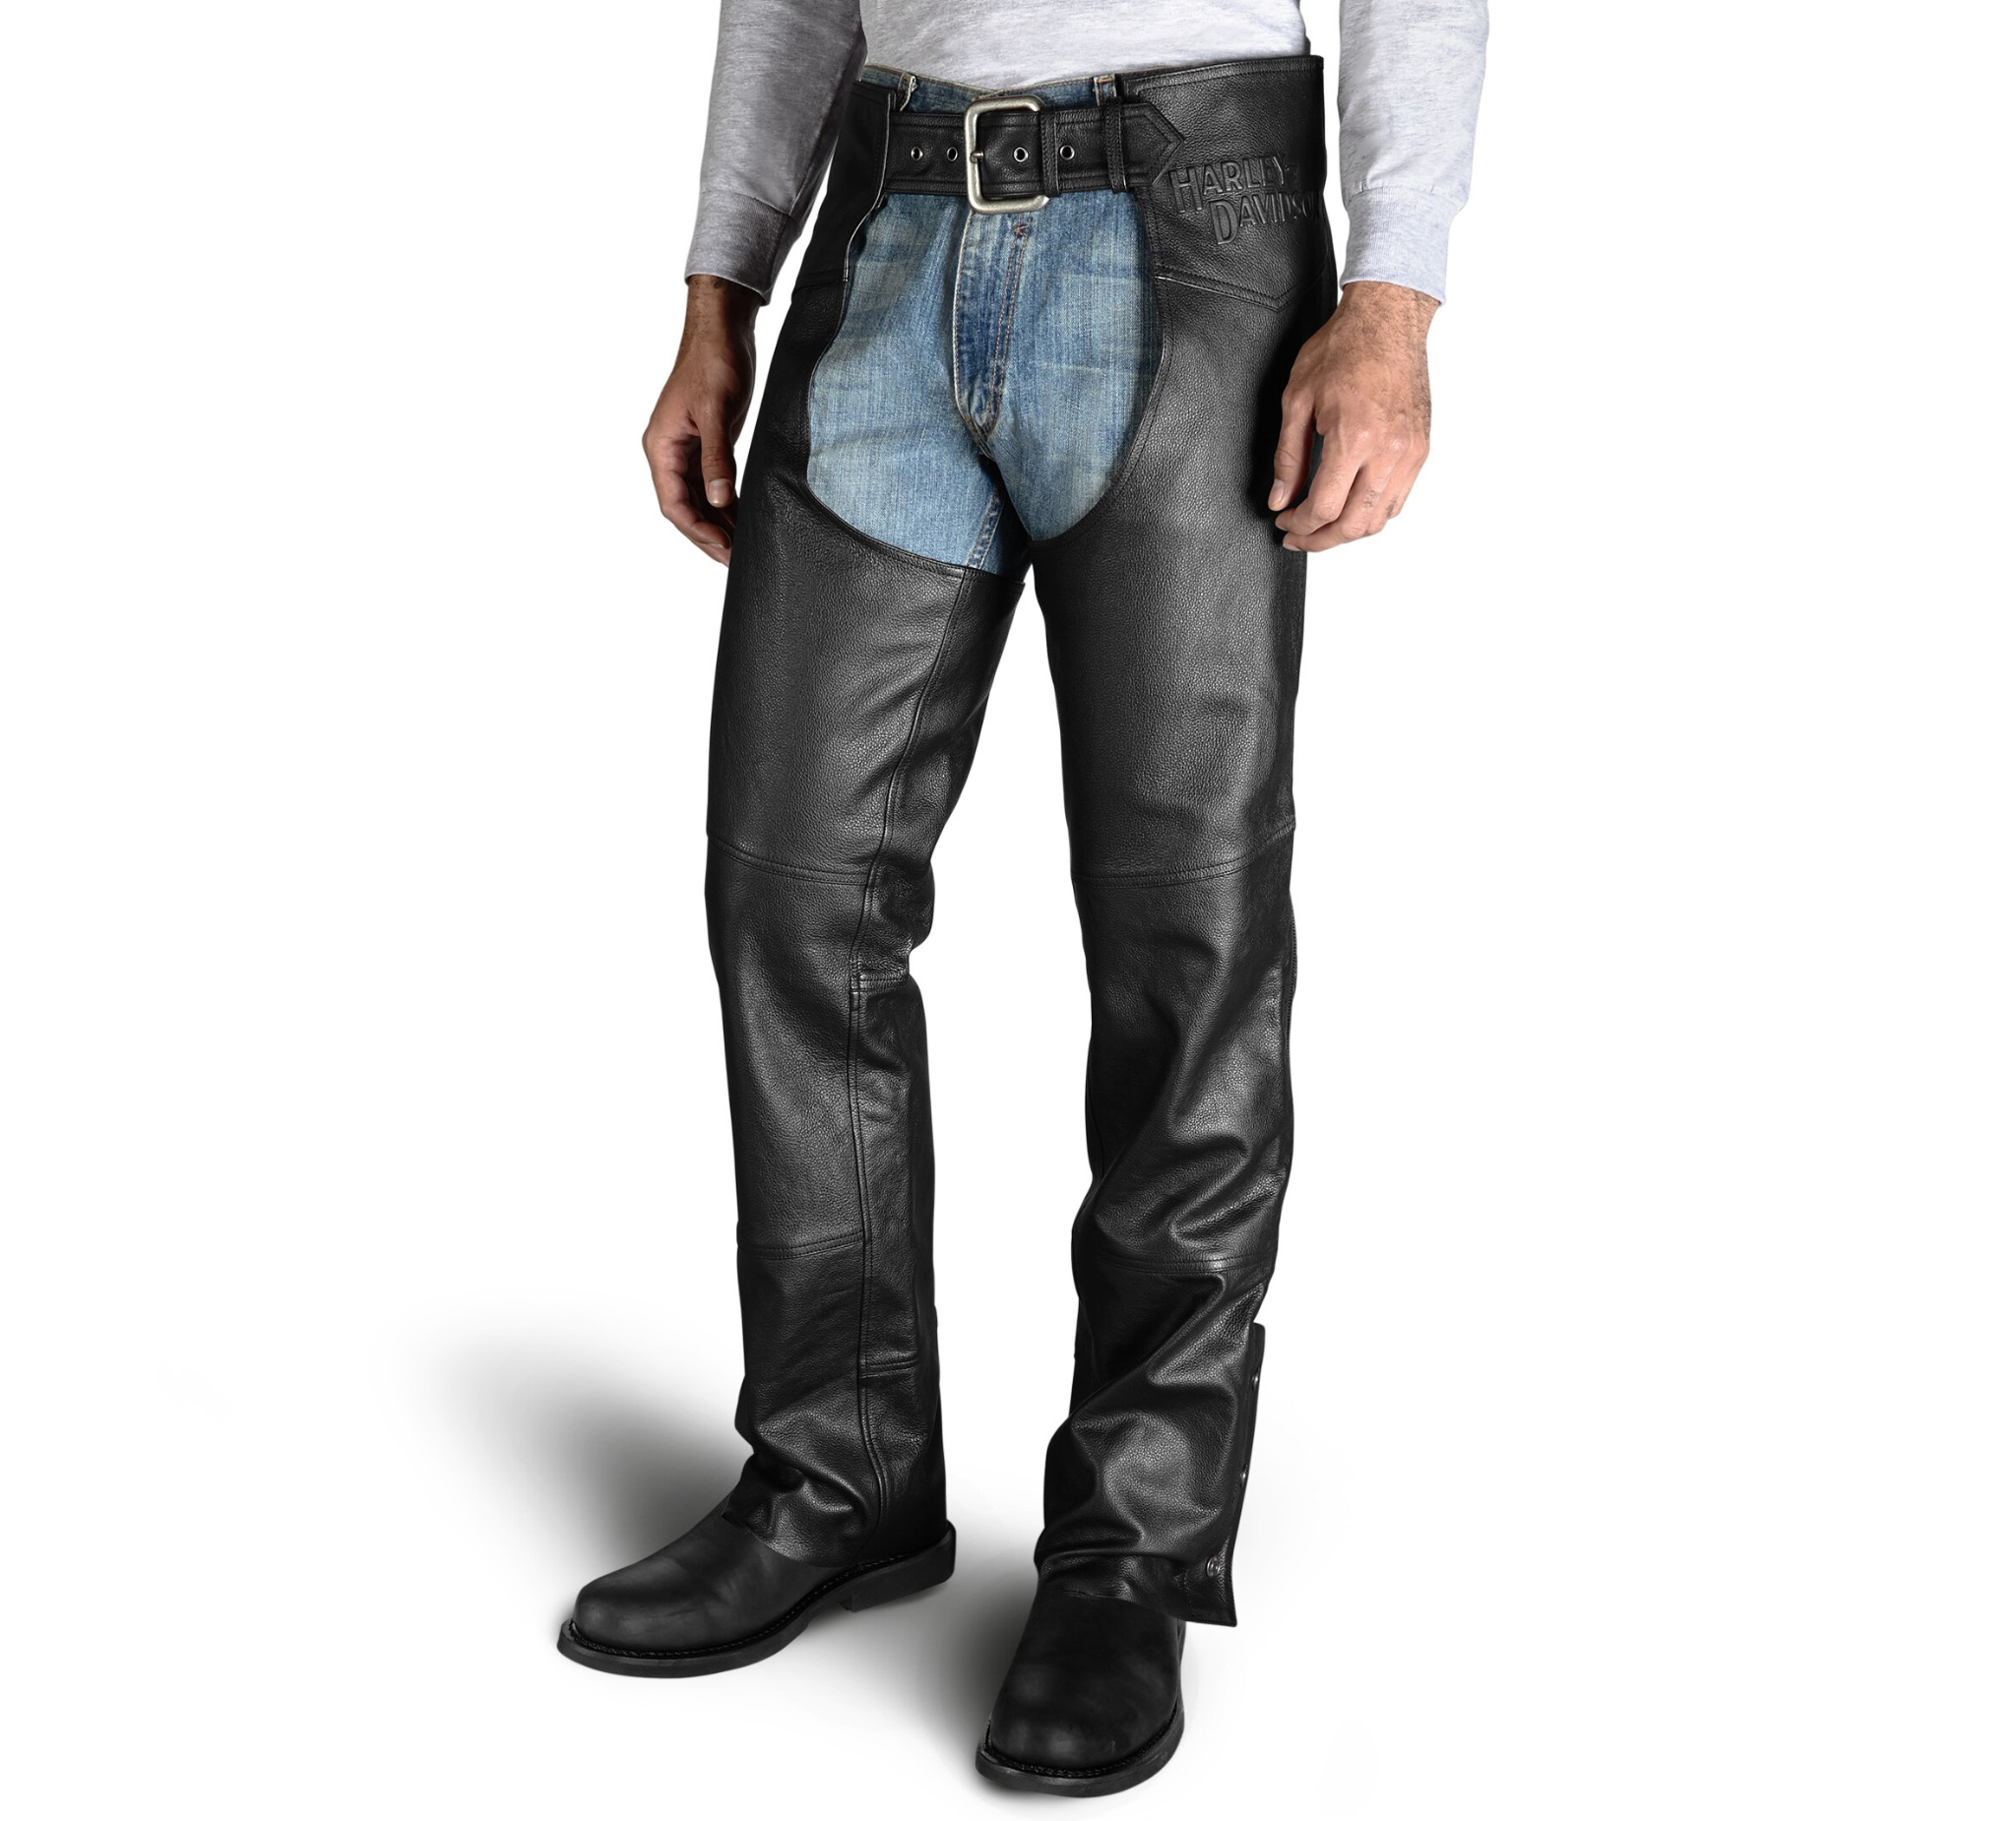 harley davidson Black leather pant size 34 / 6 Flare Laced Sides